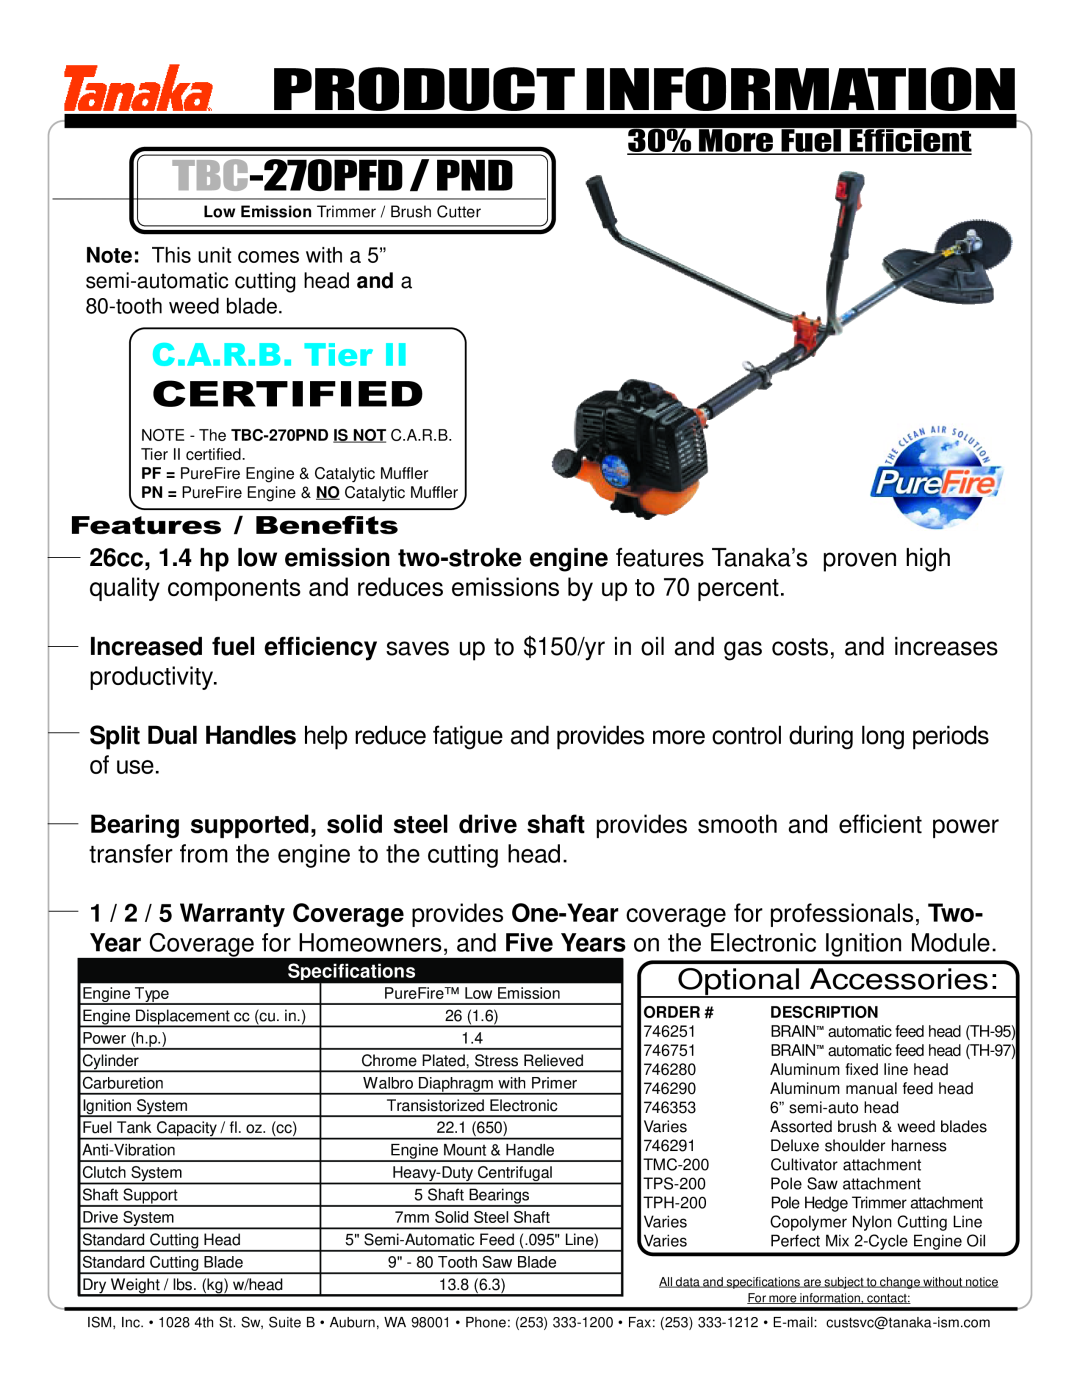 Tanaka TBC-270PFD/PND manual Product Information, TBC-270PFD / PND, Certified, C.A.R.B. Tier, 30% More Fuel Efficient 